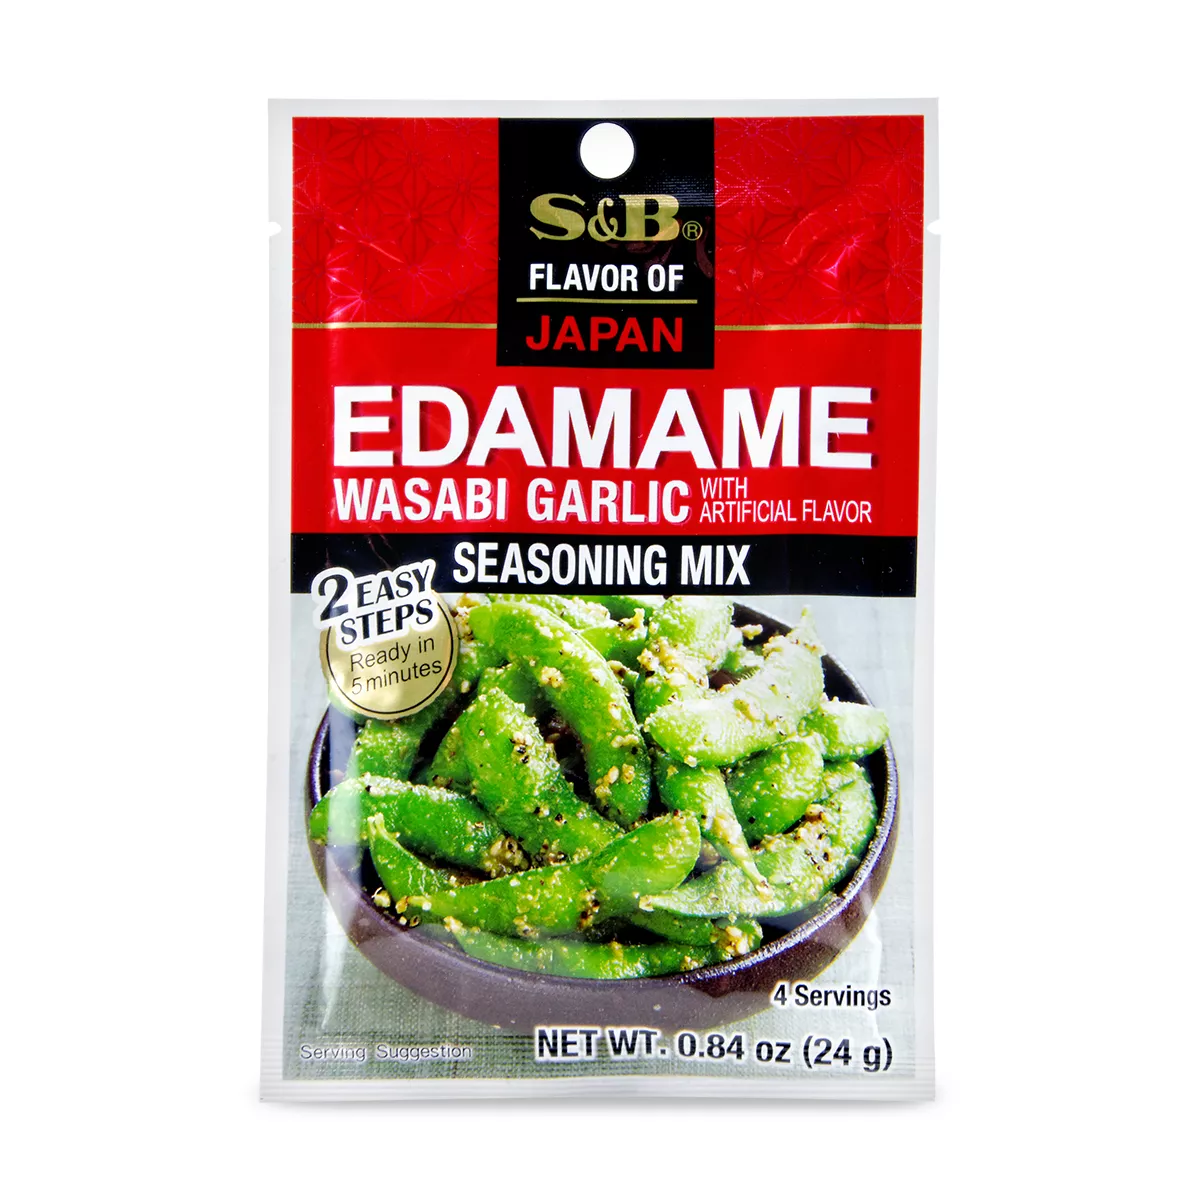 Condiment pentru Edamame (Wasabi&Usturoi) S&B 24g, [],asianfood.ro